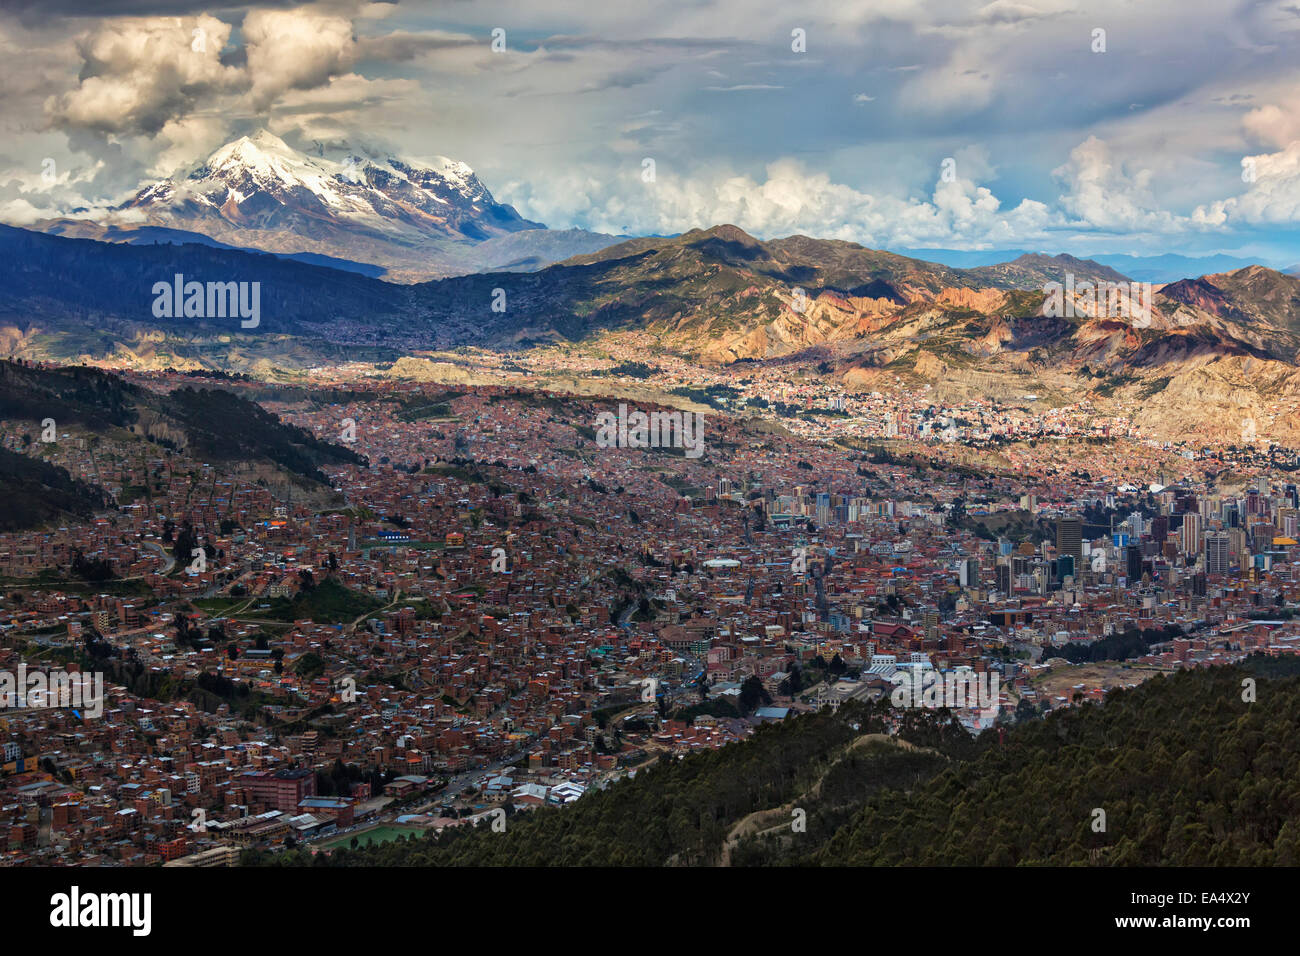 The city of La Paz with Illimani rising in the distance, the highest peak in Bolivia; La Paz, Bolivia Stock Photo